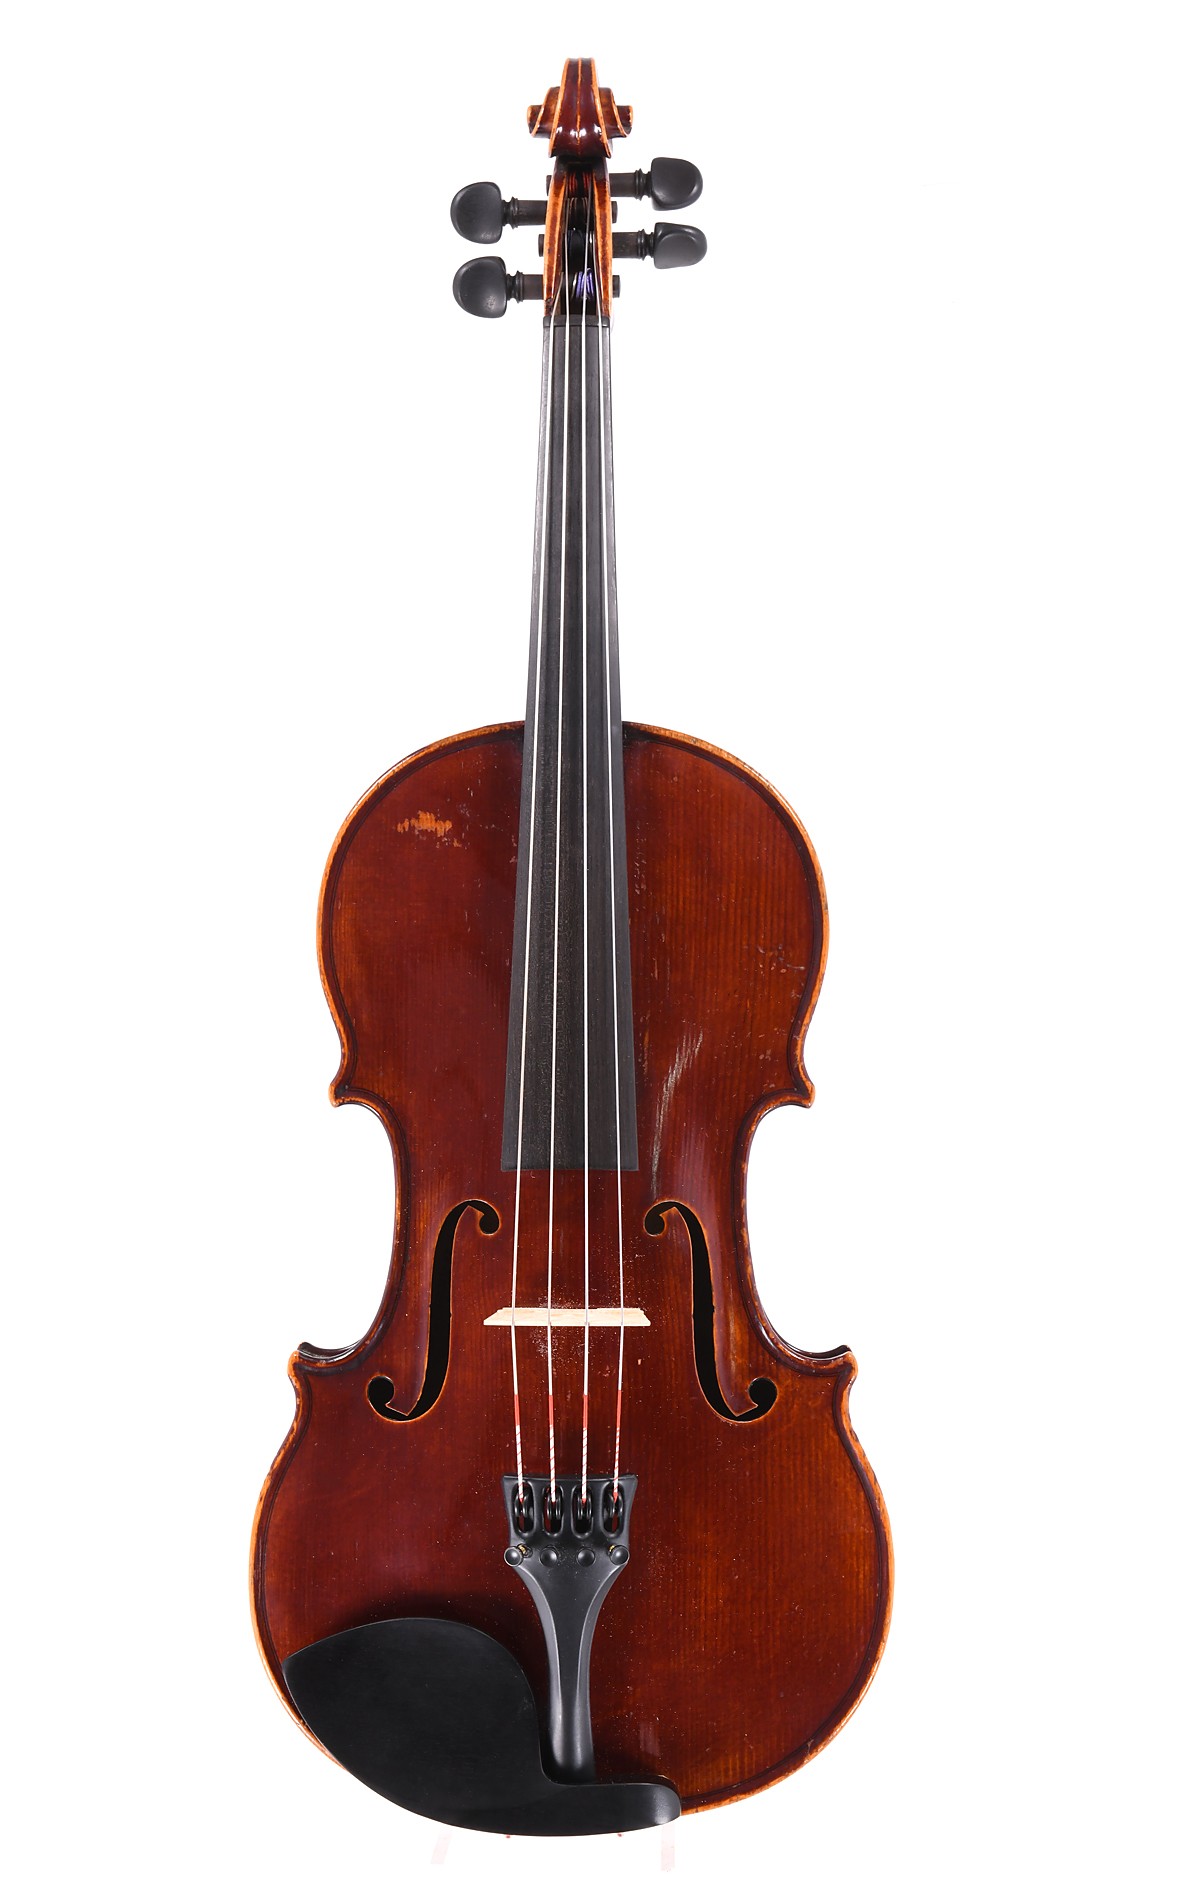 French viola by Joseph Nicolas fils, 1849